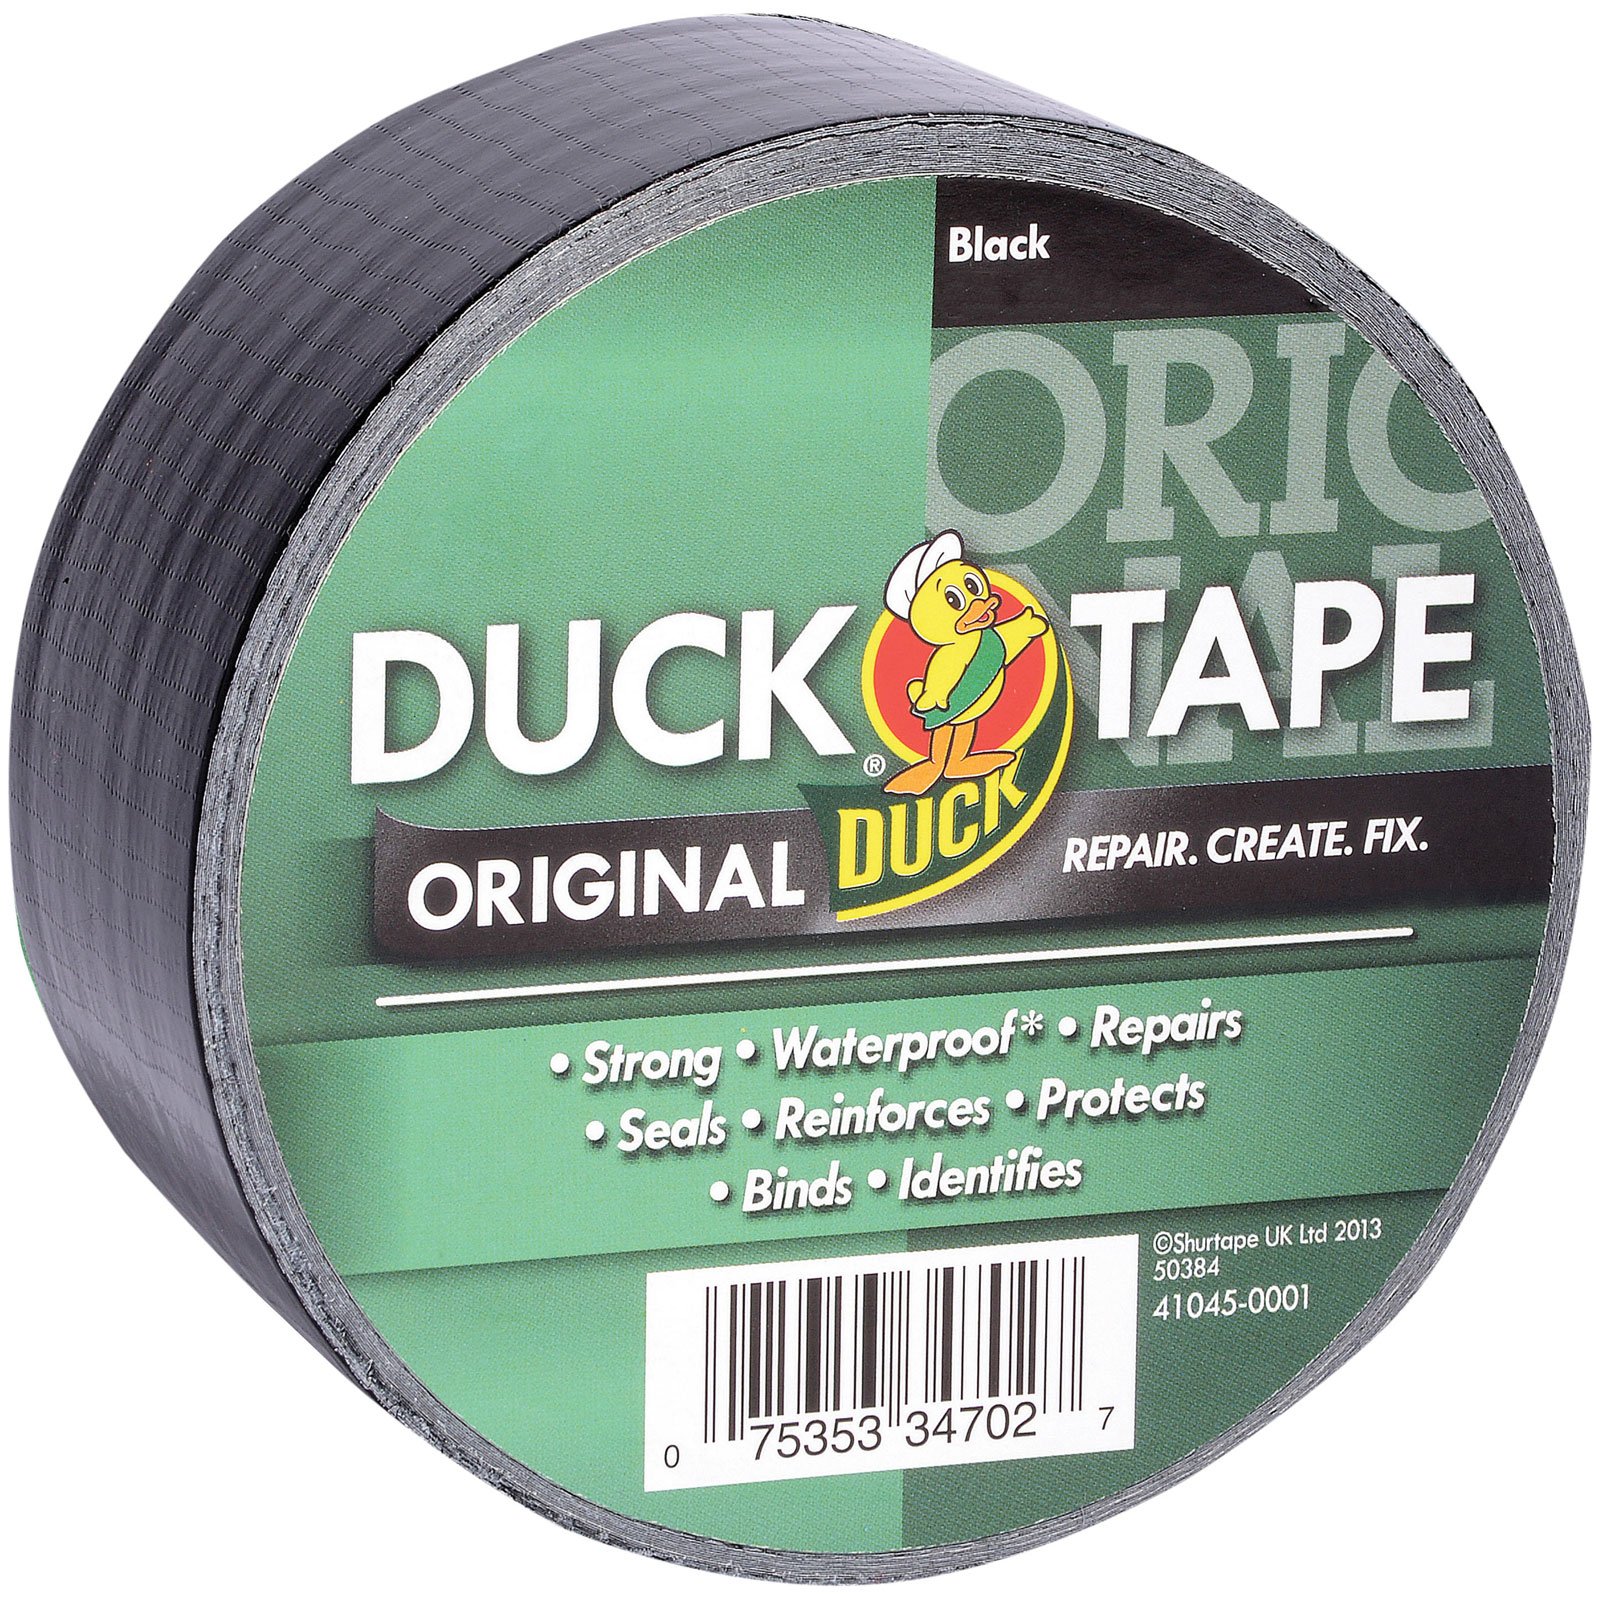 Duck Tape® 222228 Shurtape Original Trade Pack 50mm x 50m Black